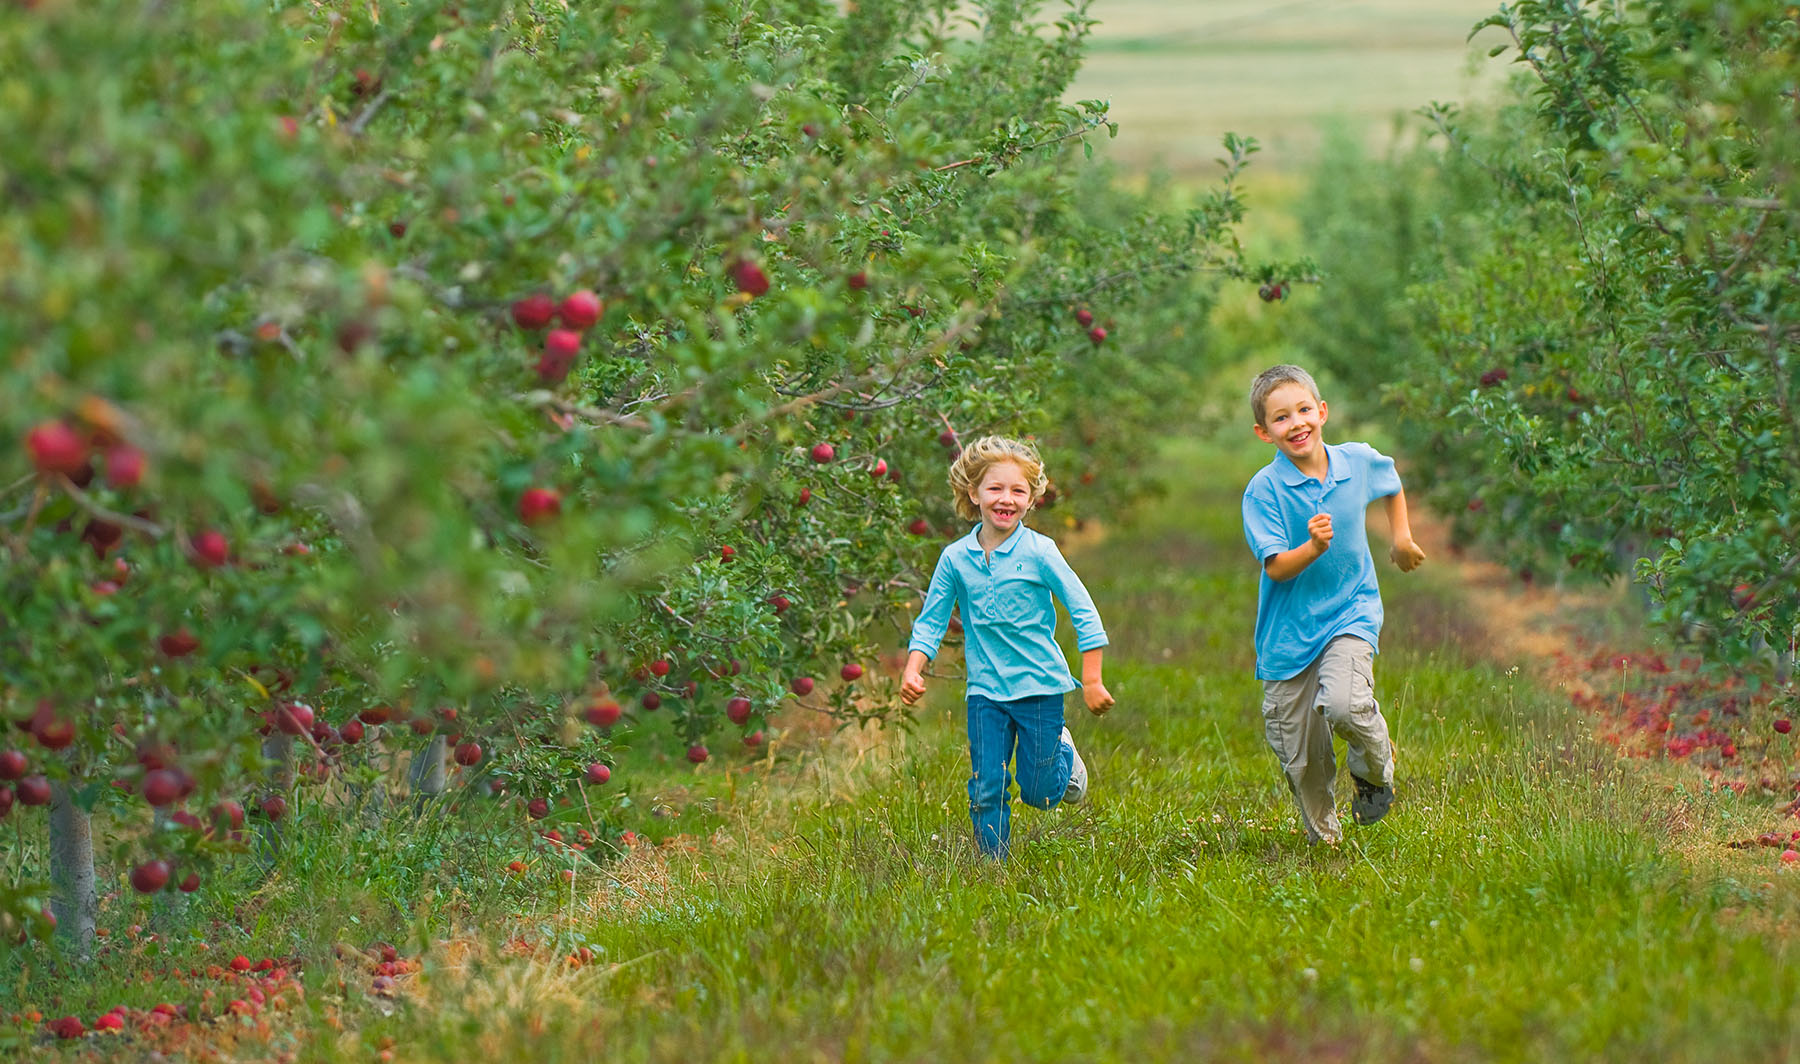 Children running in field of apples